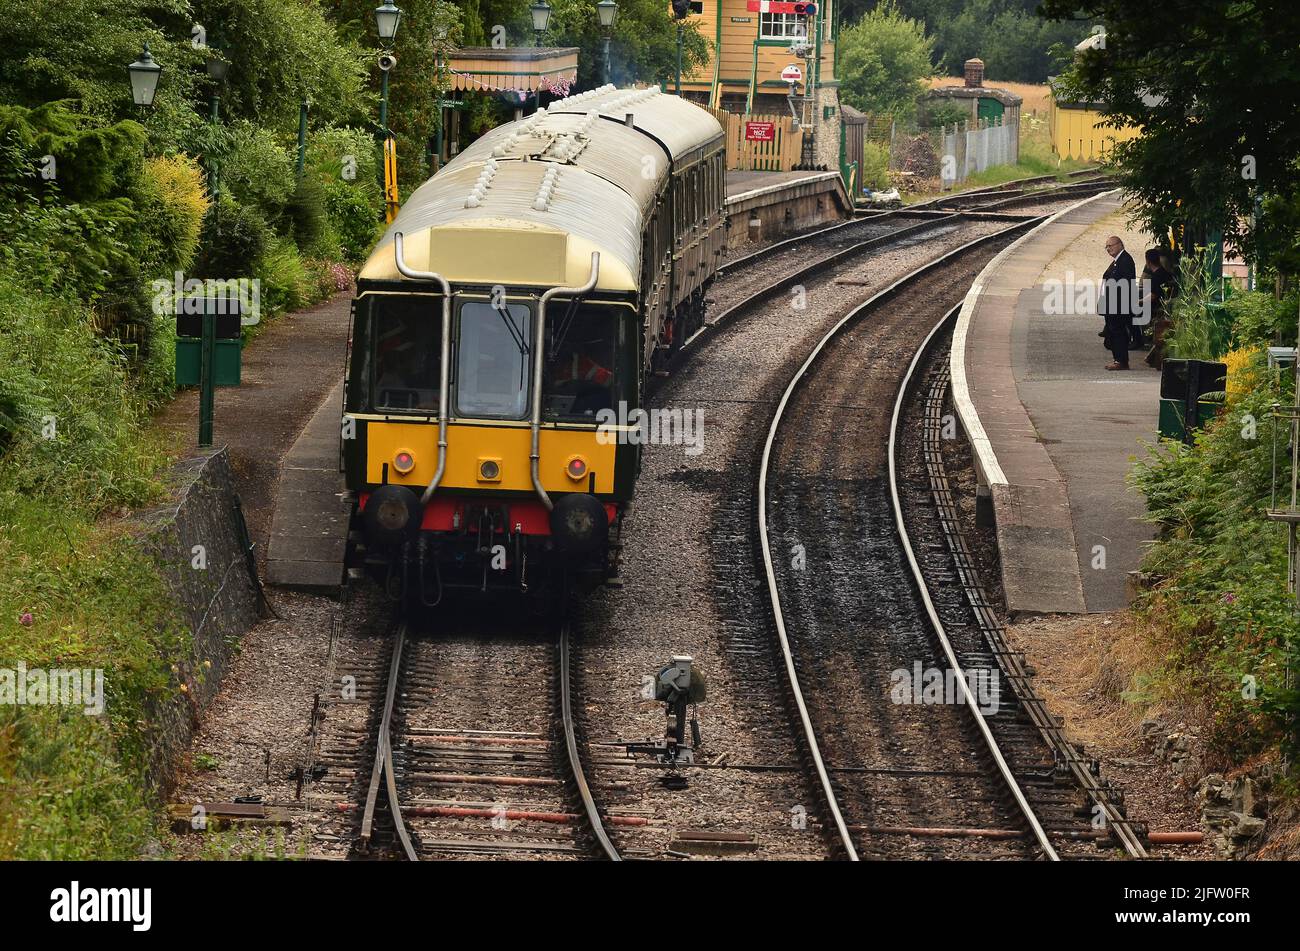 Diesel passenger train in Harman's Cross station on the Swanage steam railway, Dorset, UK Stock Photo